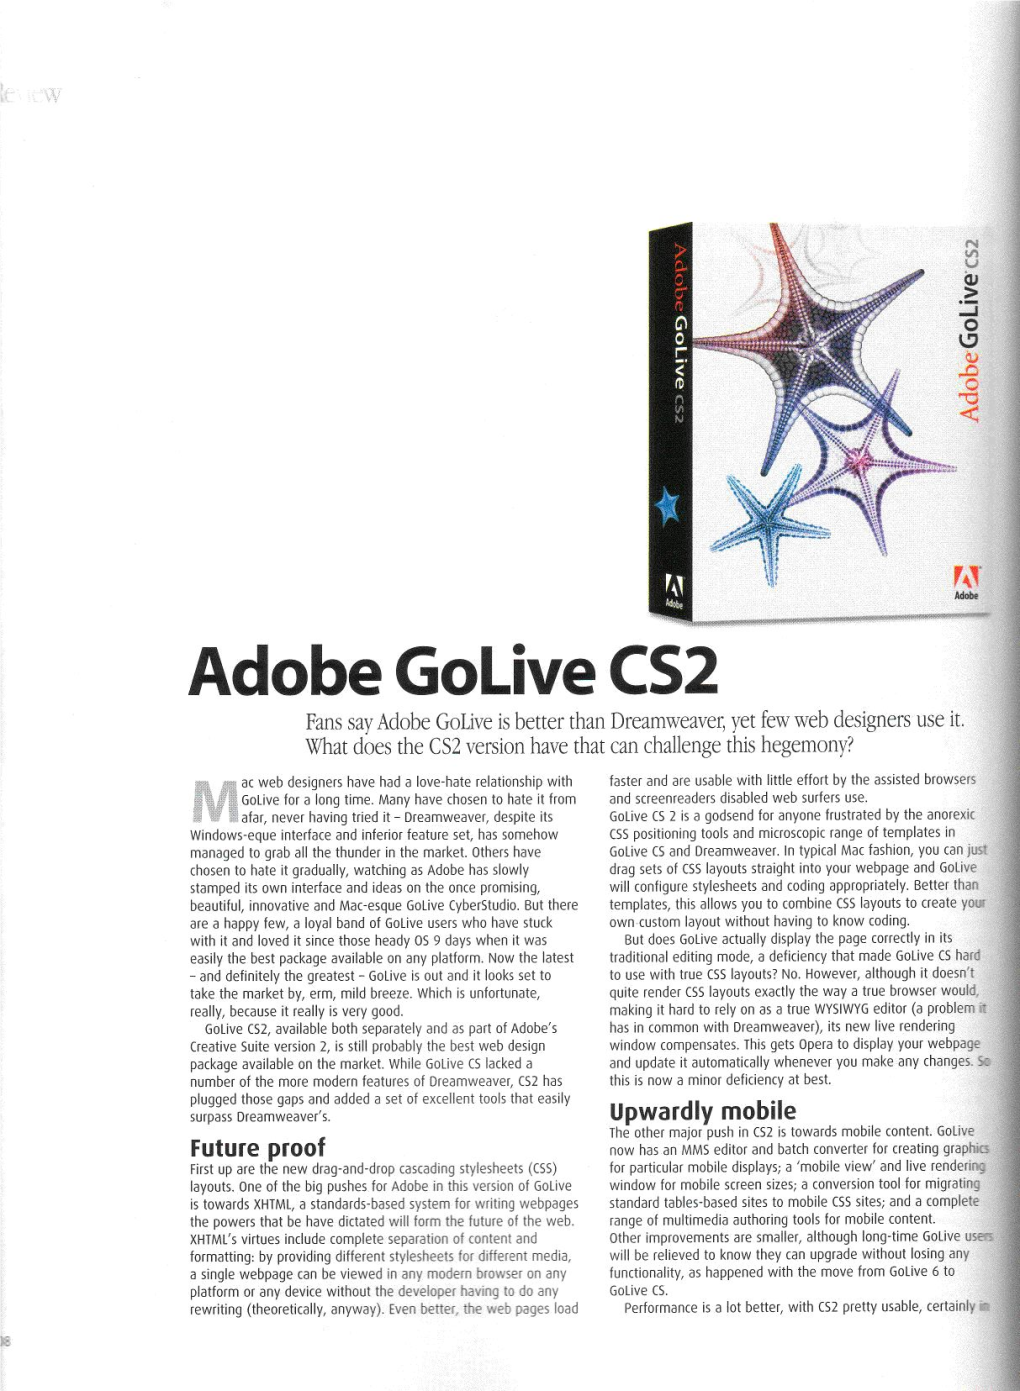 Adobe Golive CS2 Fans Say Adobe Golive Is Better Than Dreamweaver, Yet Few Web Designers Use It